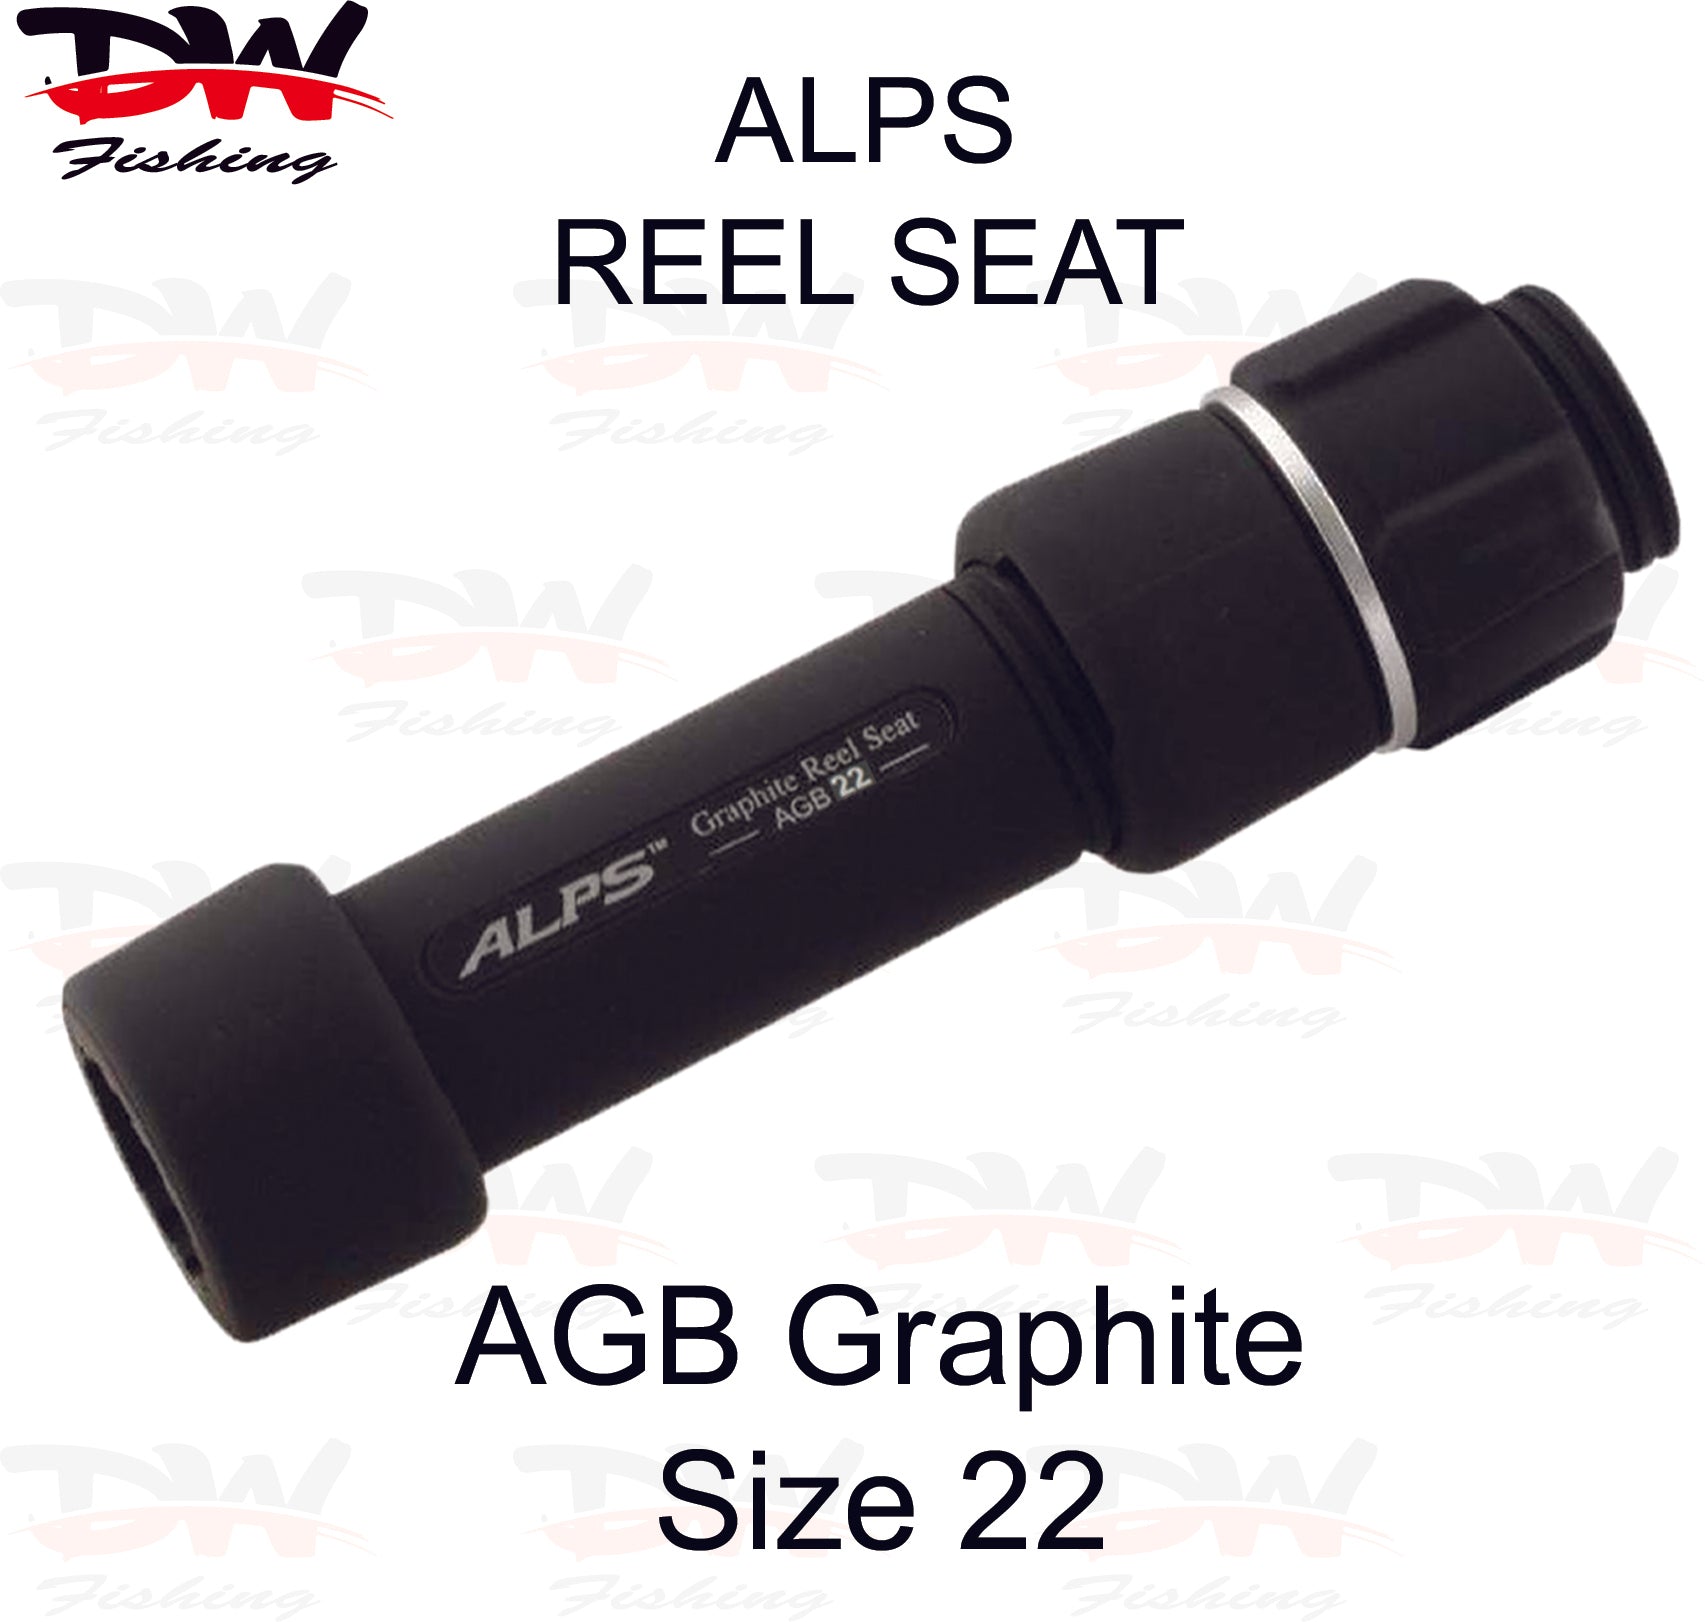 Graphite reel seat-ALPS 22